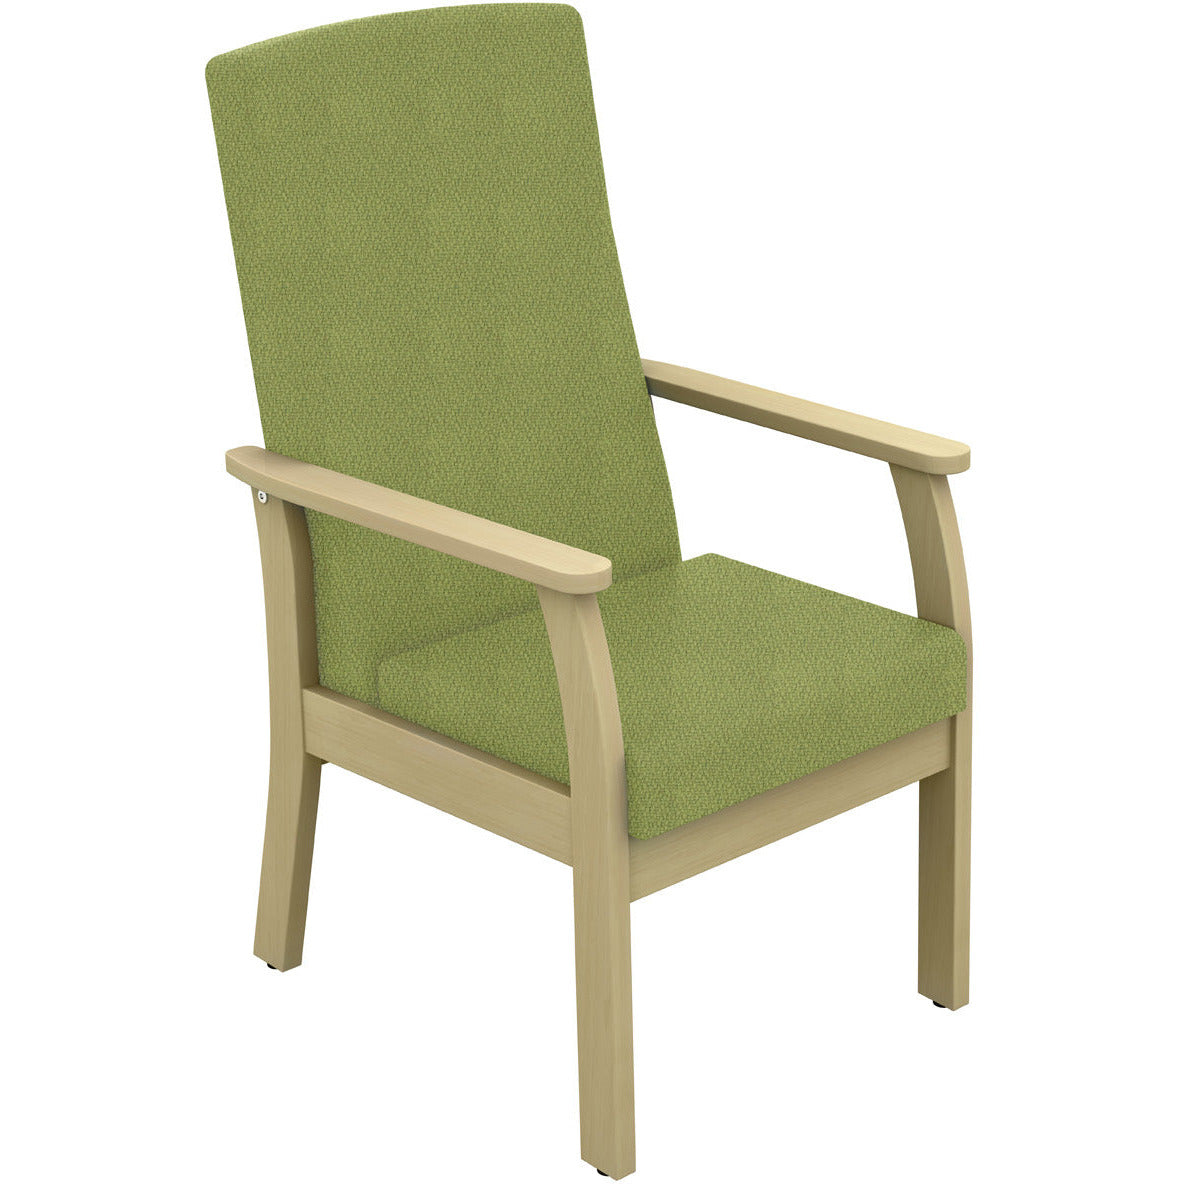 Sunflower Atlas Mid-Back Patient Chair - Intervene Upholstery